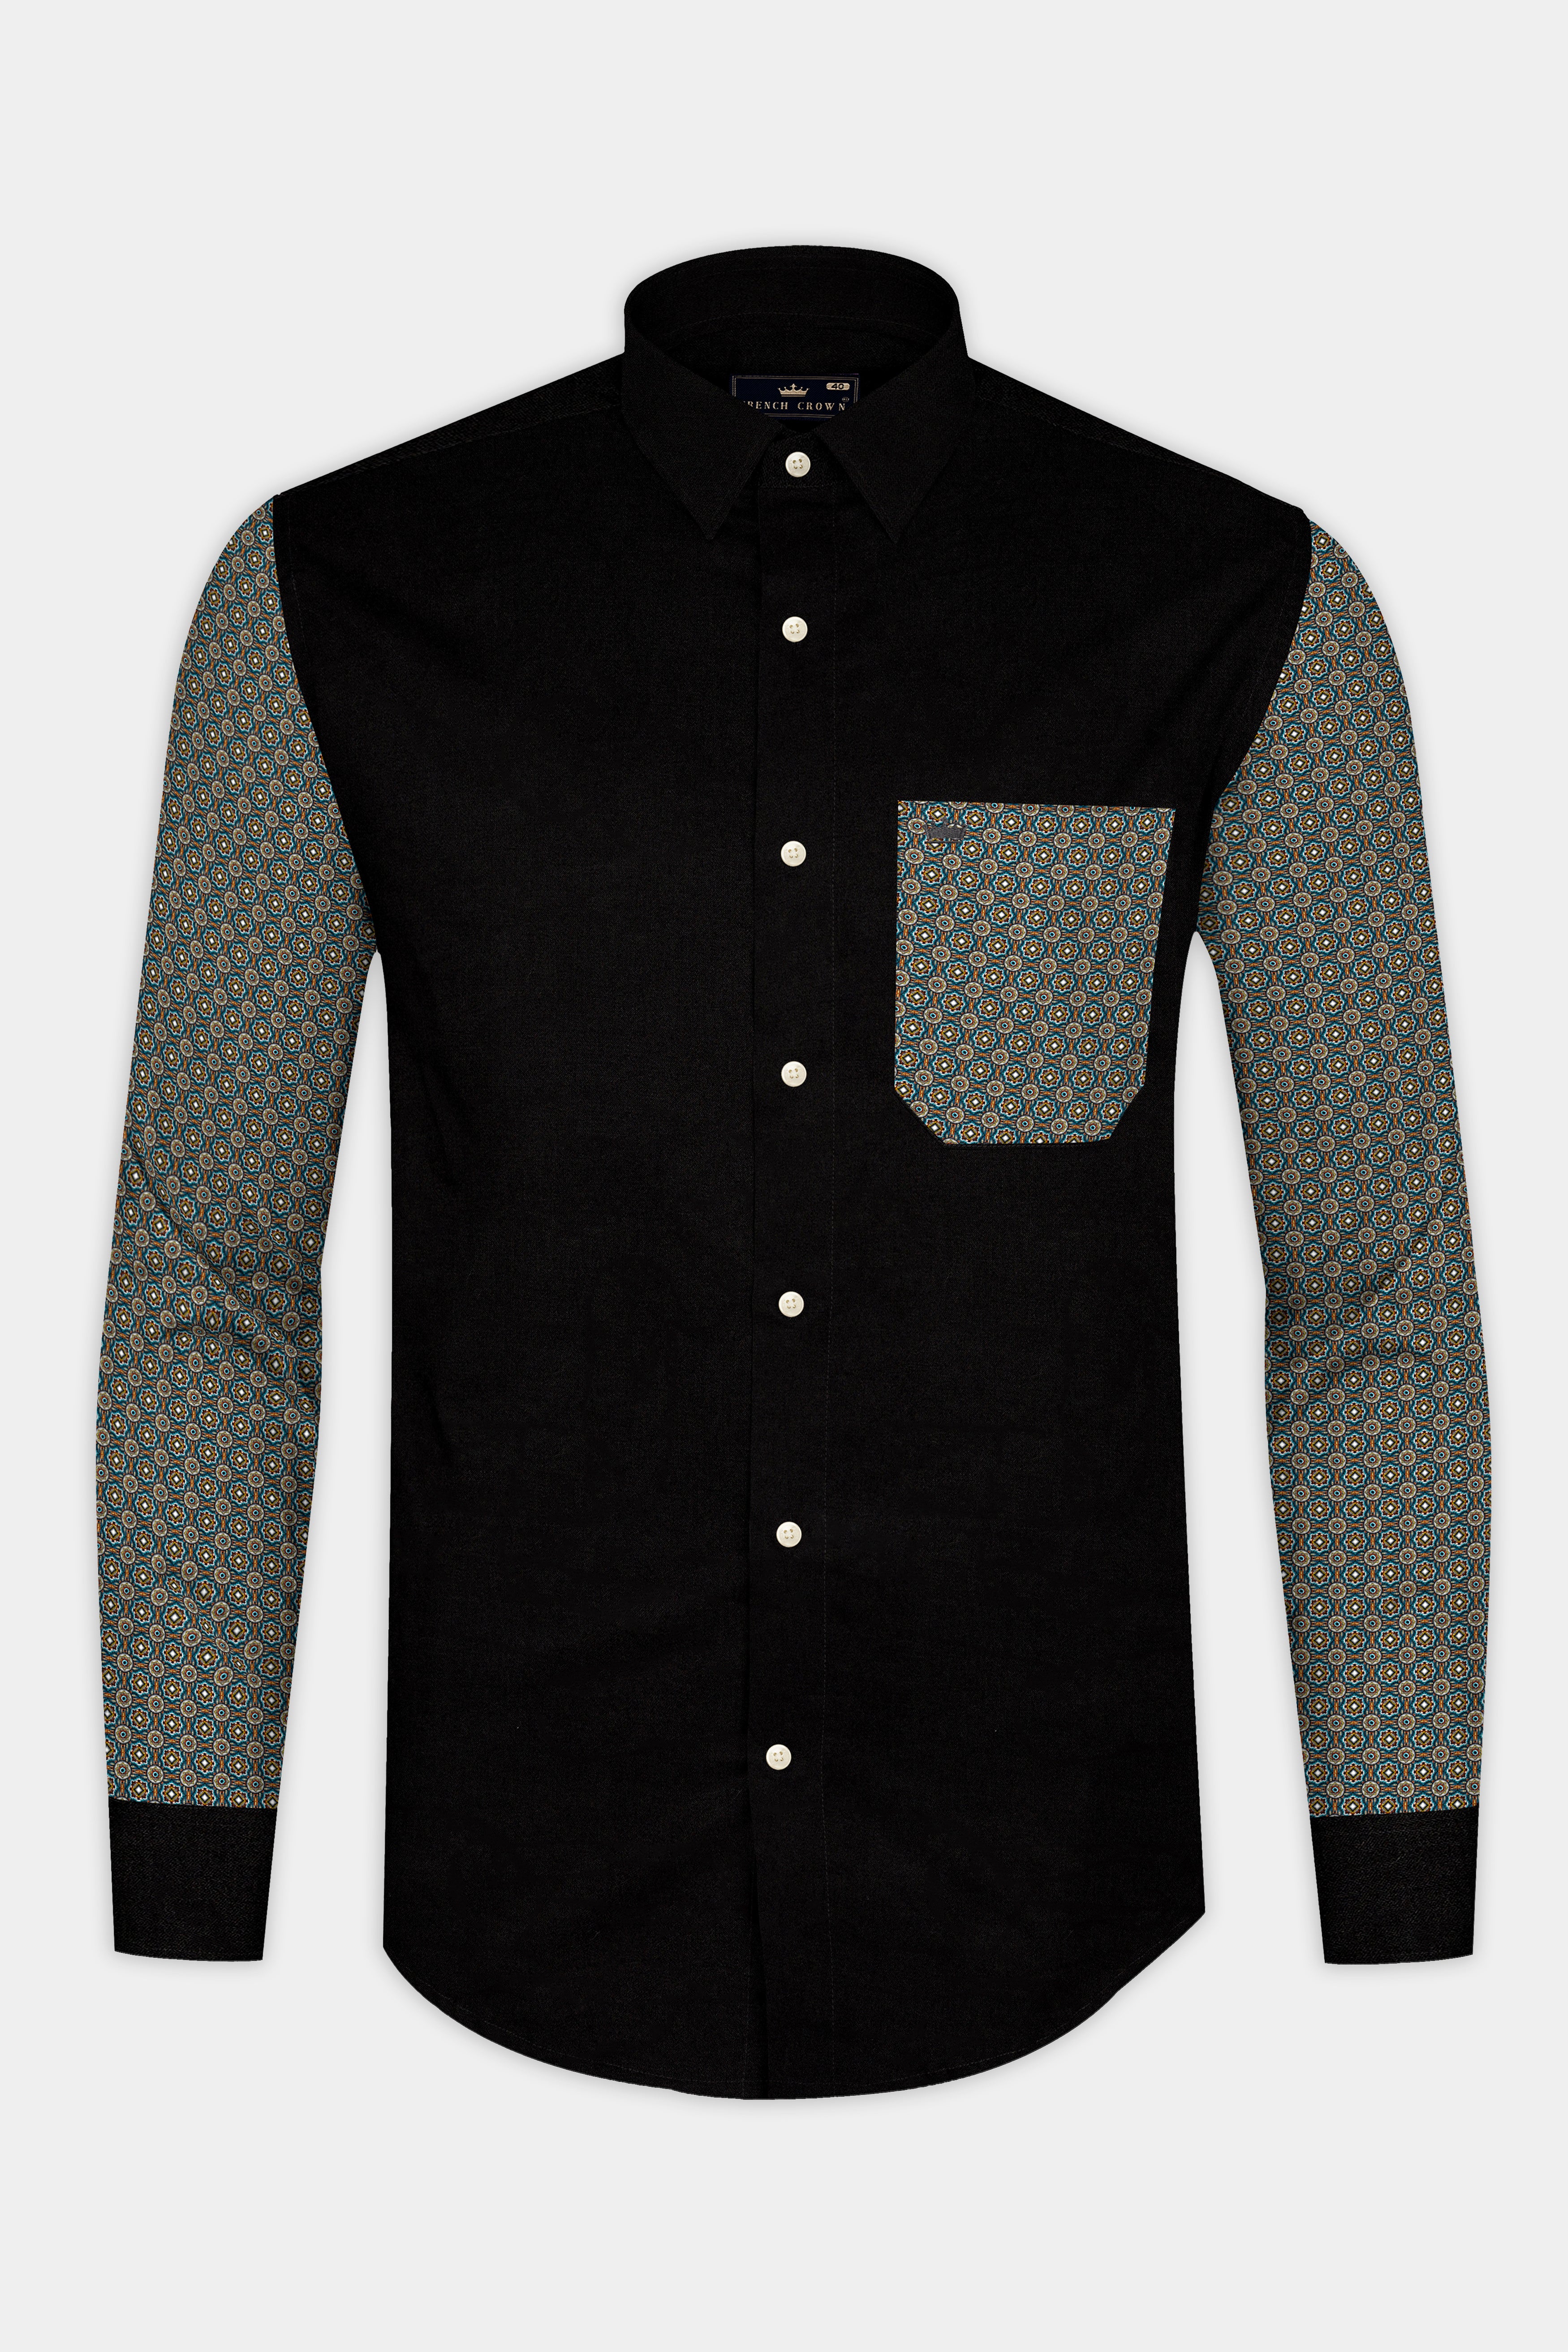 Vulcan Black Super Soft Premium Cotton Designer Shirt